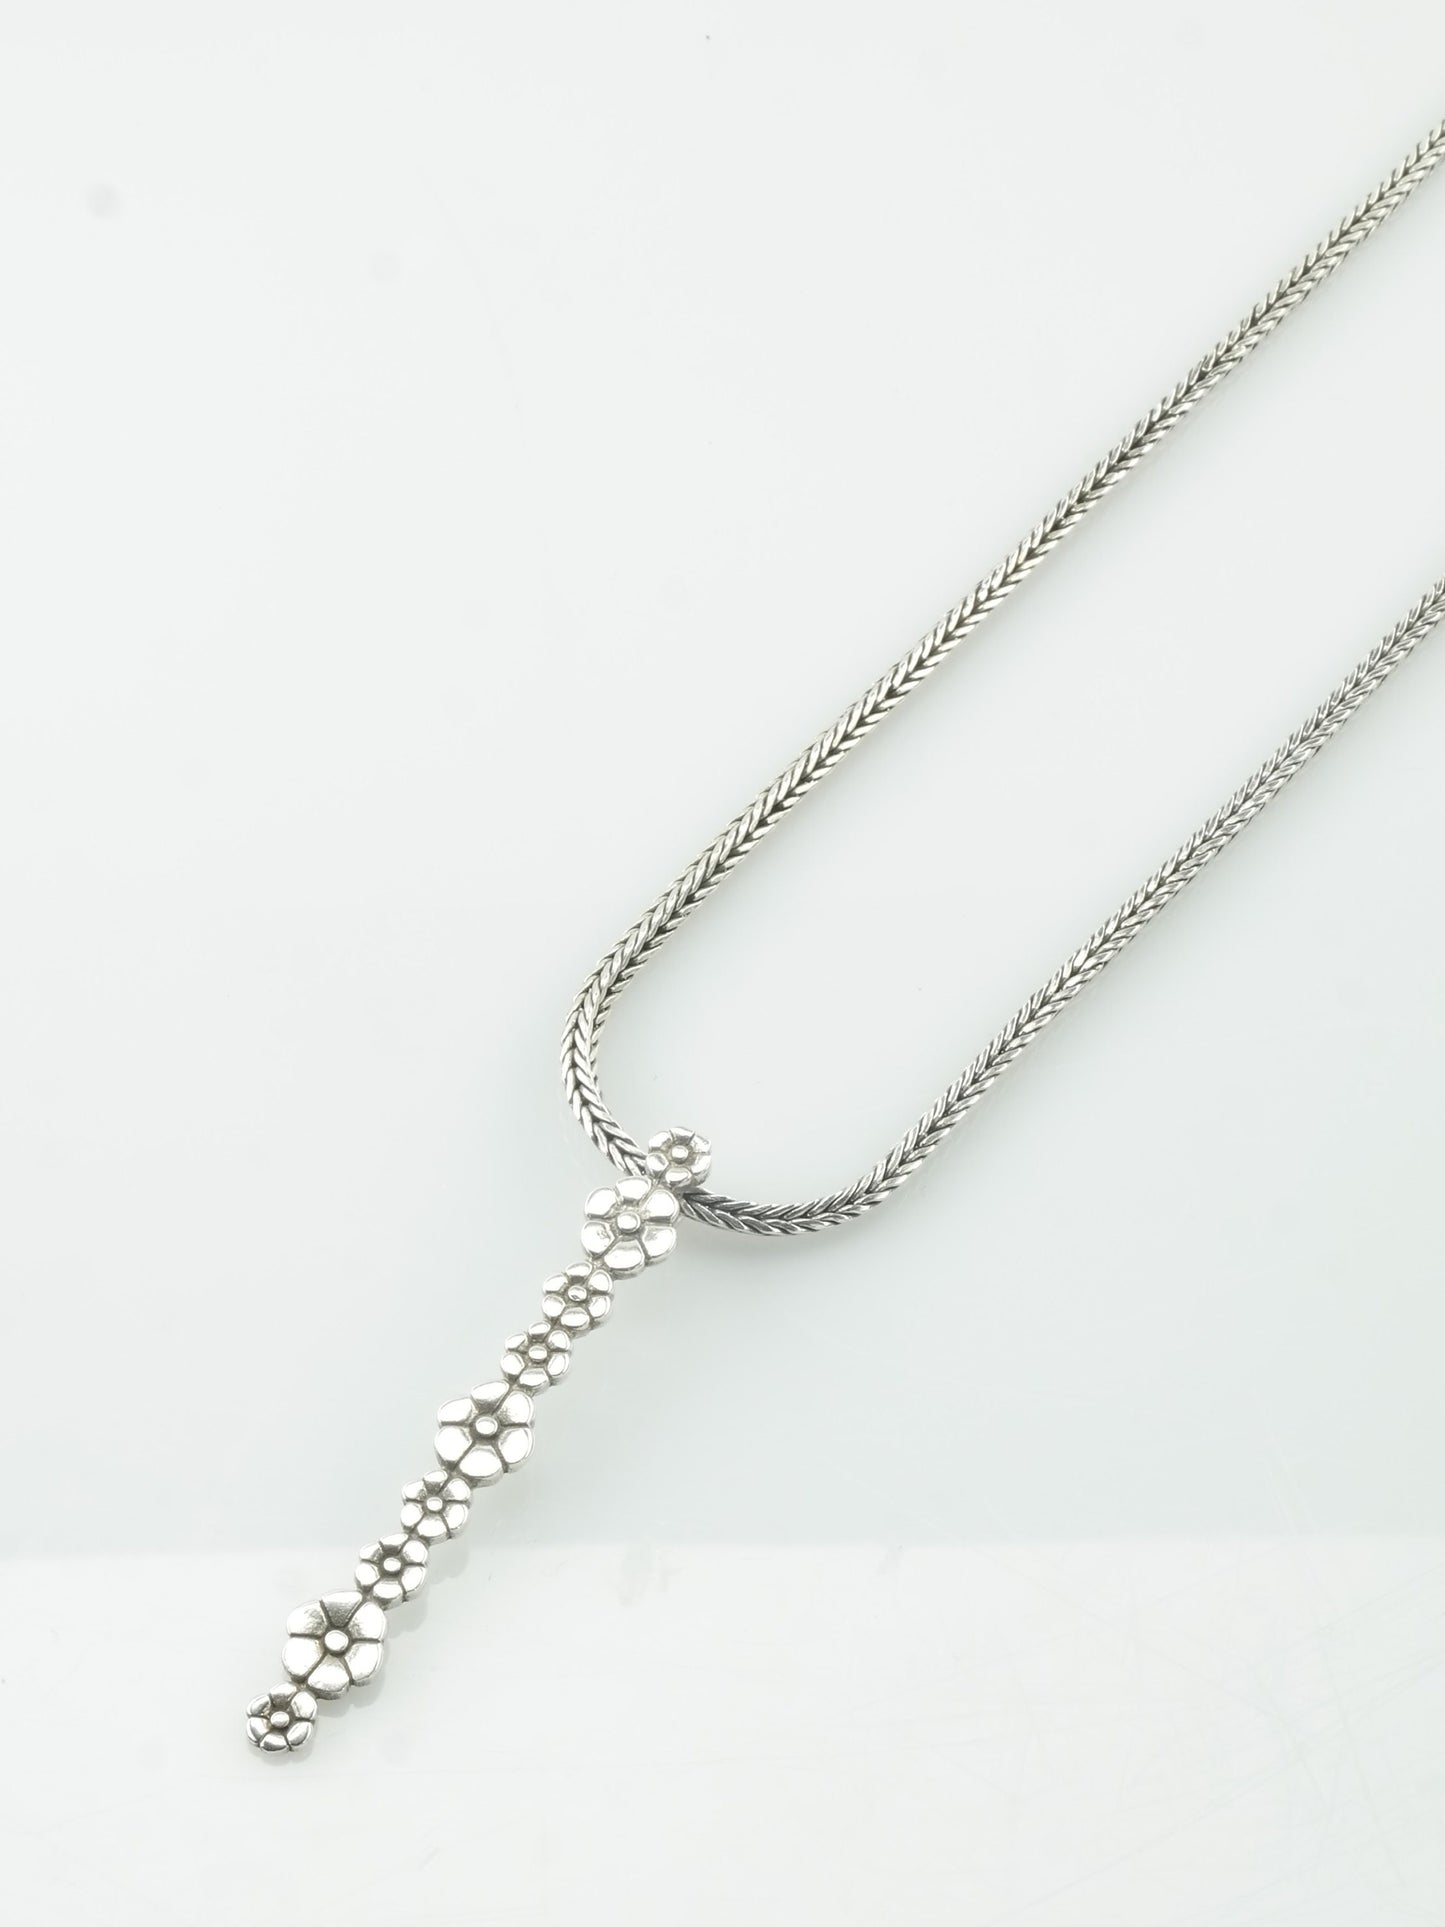 Vintage Lois Hill Sterling Silver Flower Necklace